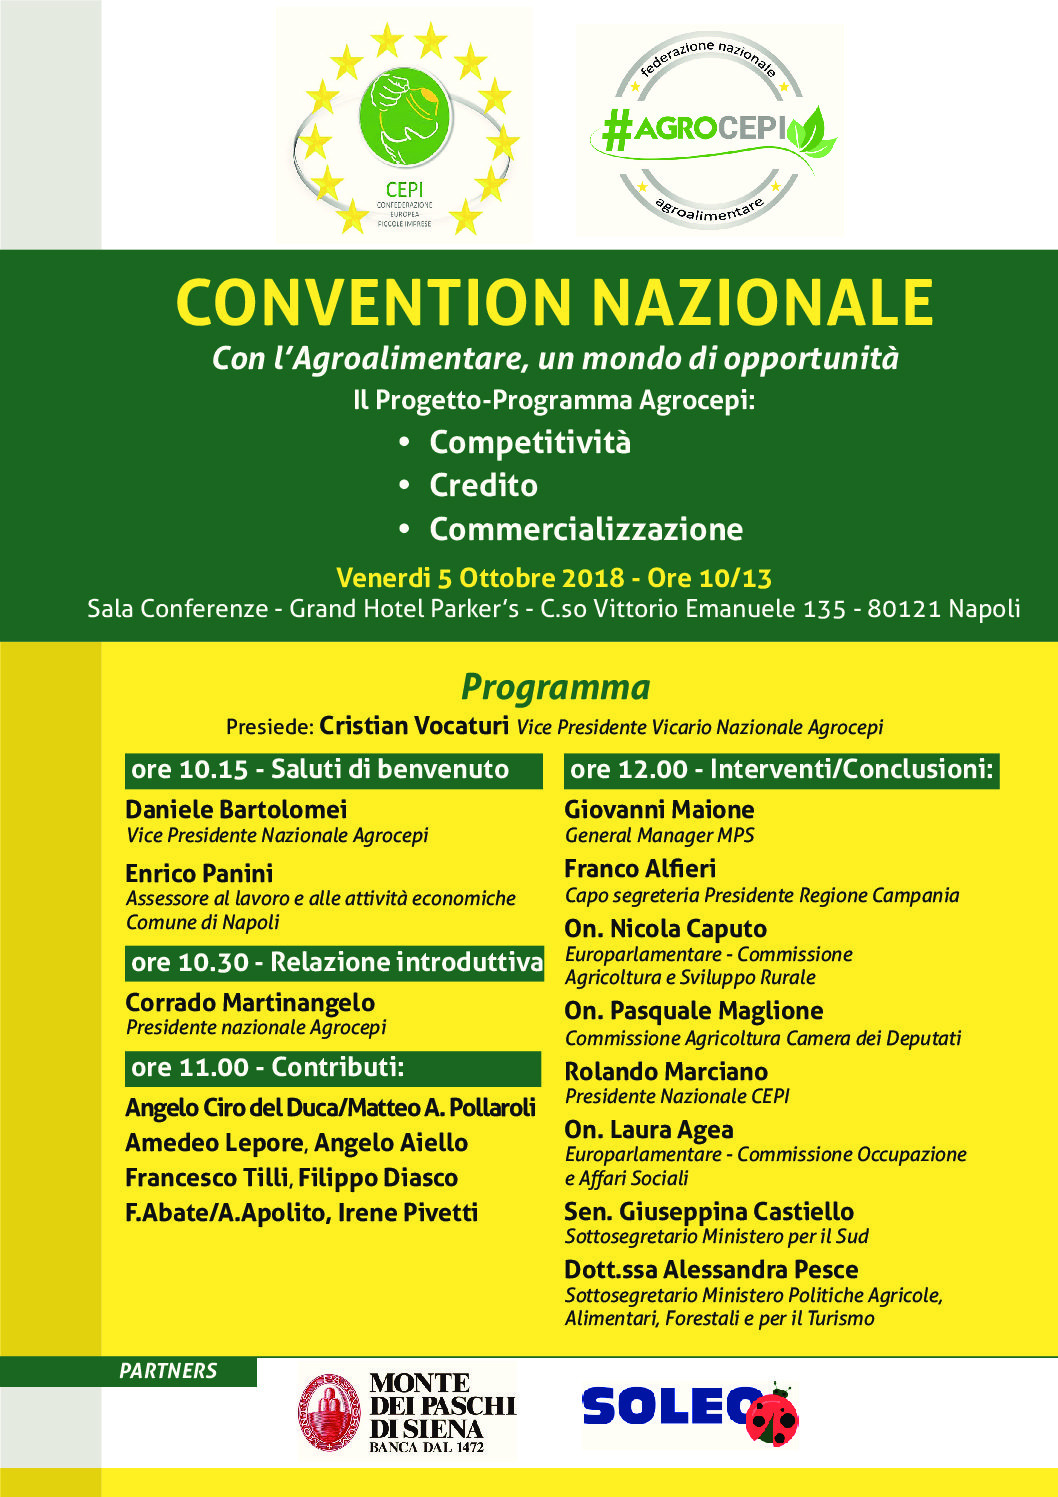 CONVENTION NAZIONALE #AGROCEPI – Venerdì 5 ottobre 2018